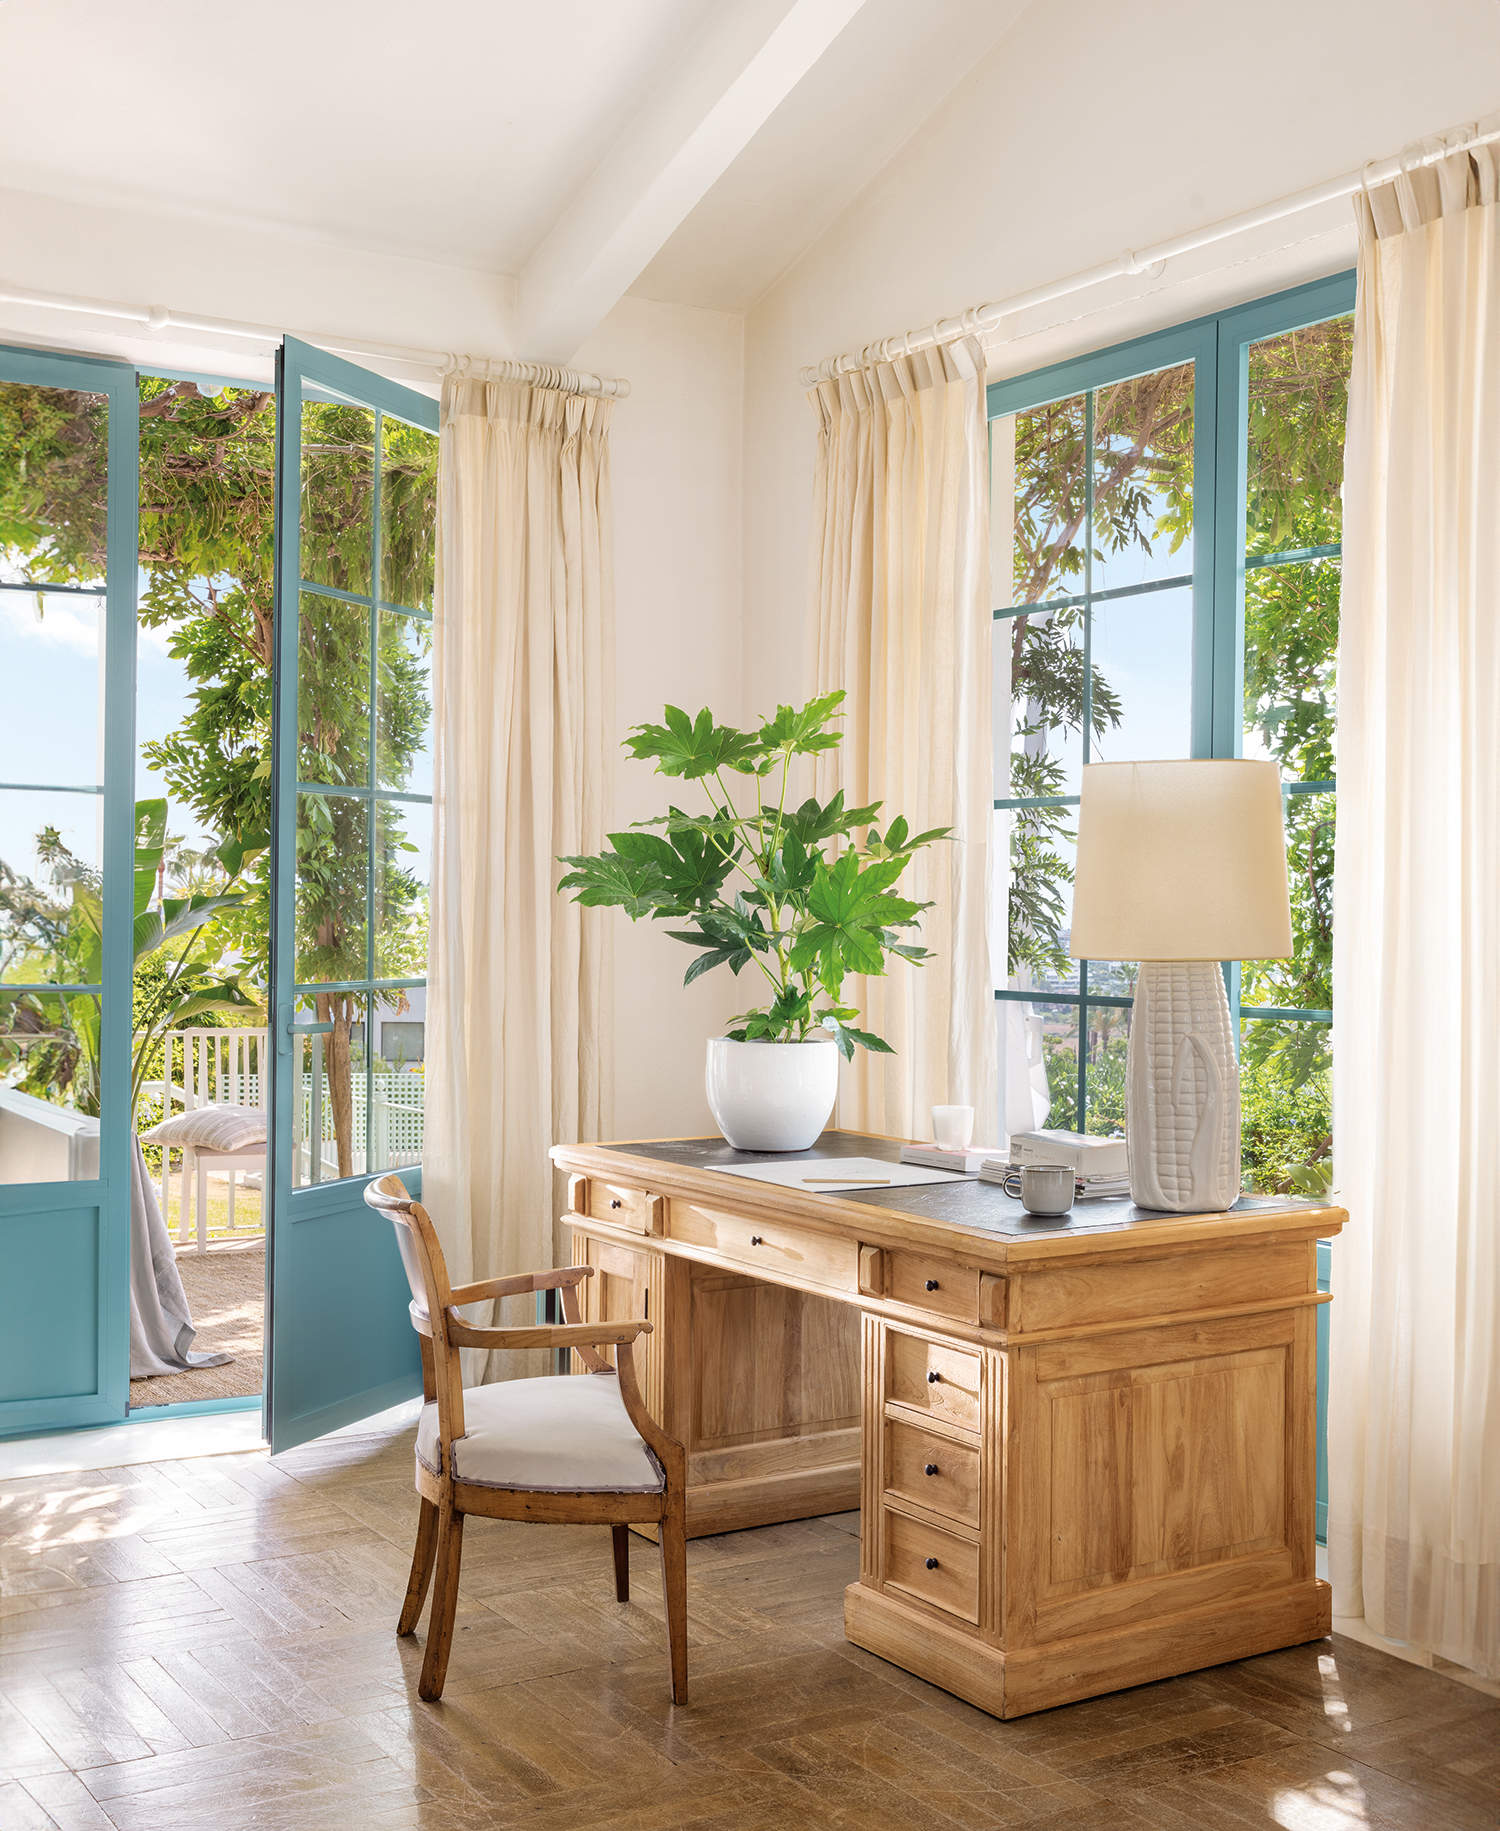 Salón con zona de escritorio de madera natural y ventanas con carpintería azul